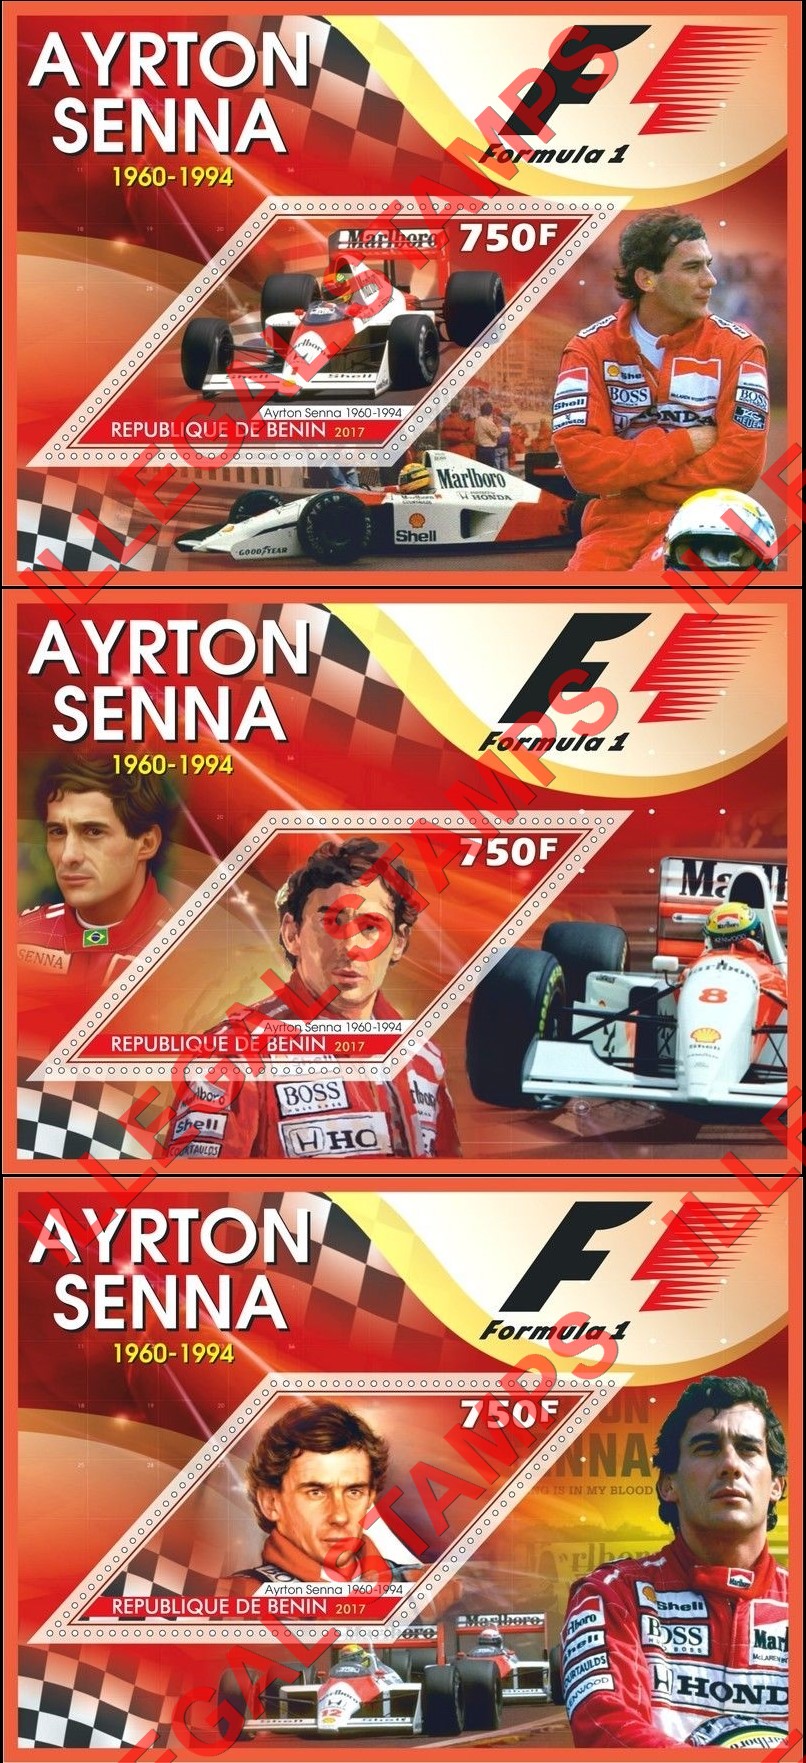 Benin 2017 Formula I Ayrton Senna Illegal Stamp Souvenir Sheets of 1 (Part 2)